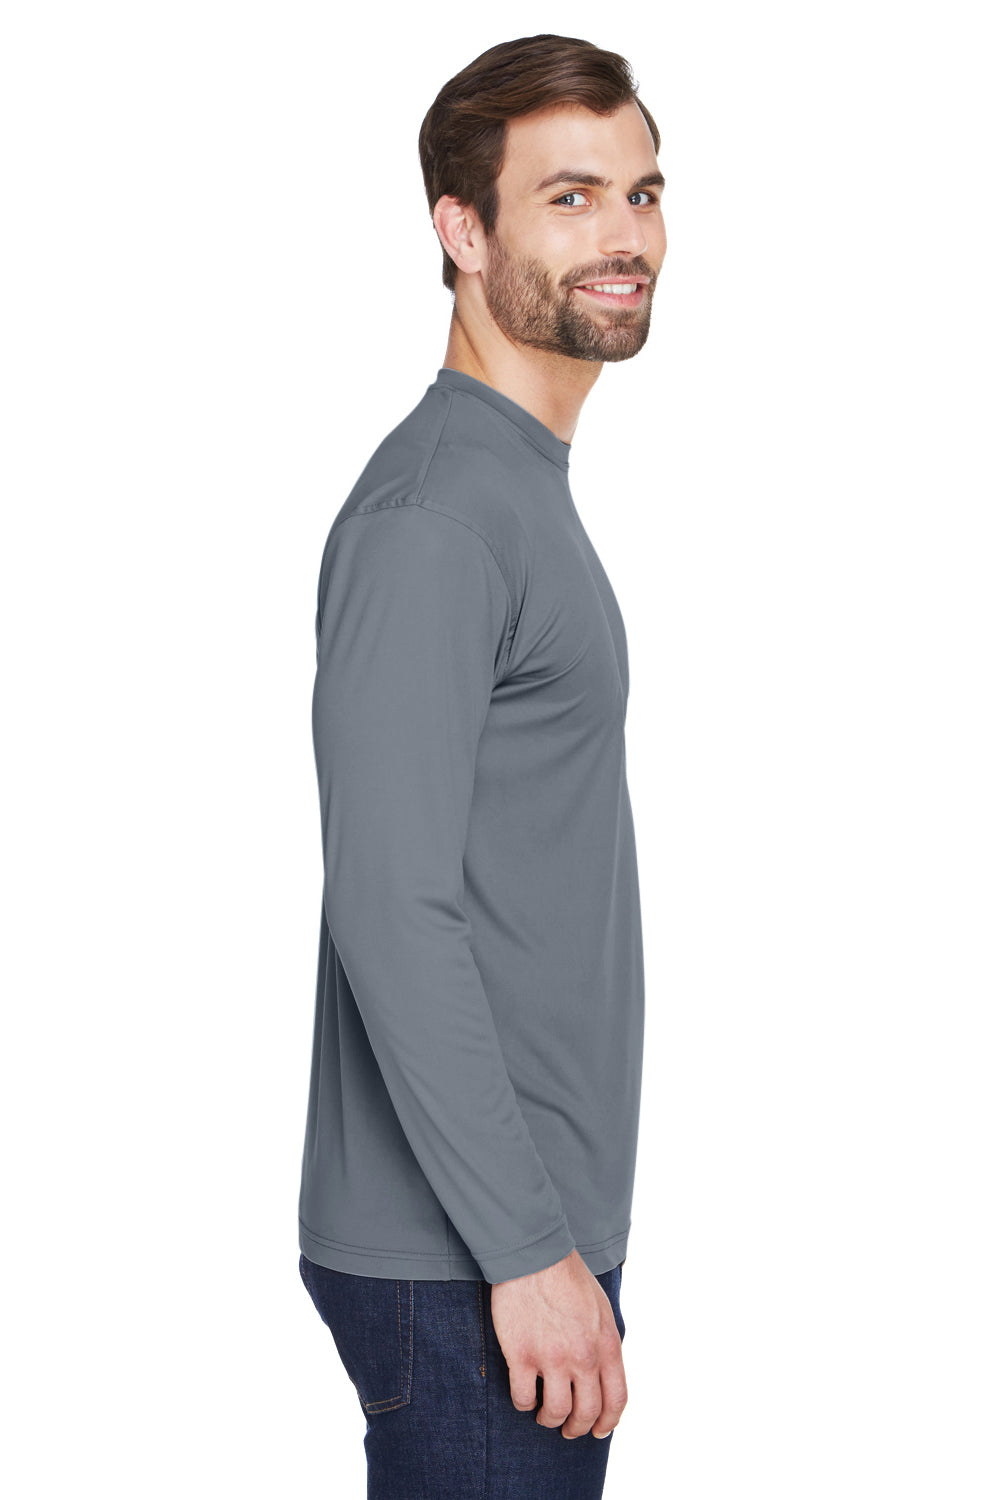 UltraClub 8422 Mens Cool & Dry Performance Moisture Wicking Long Sleeve Crewneck T-Shirt Charcoal Grey Side